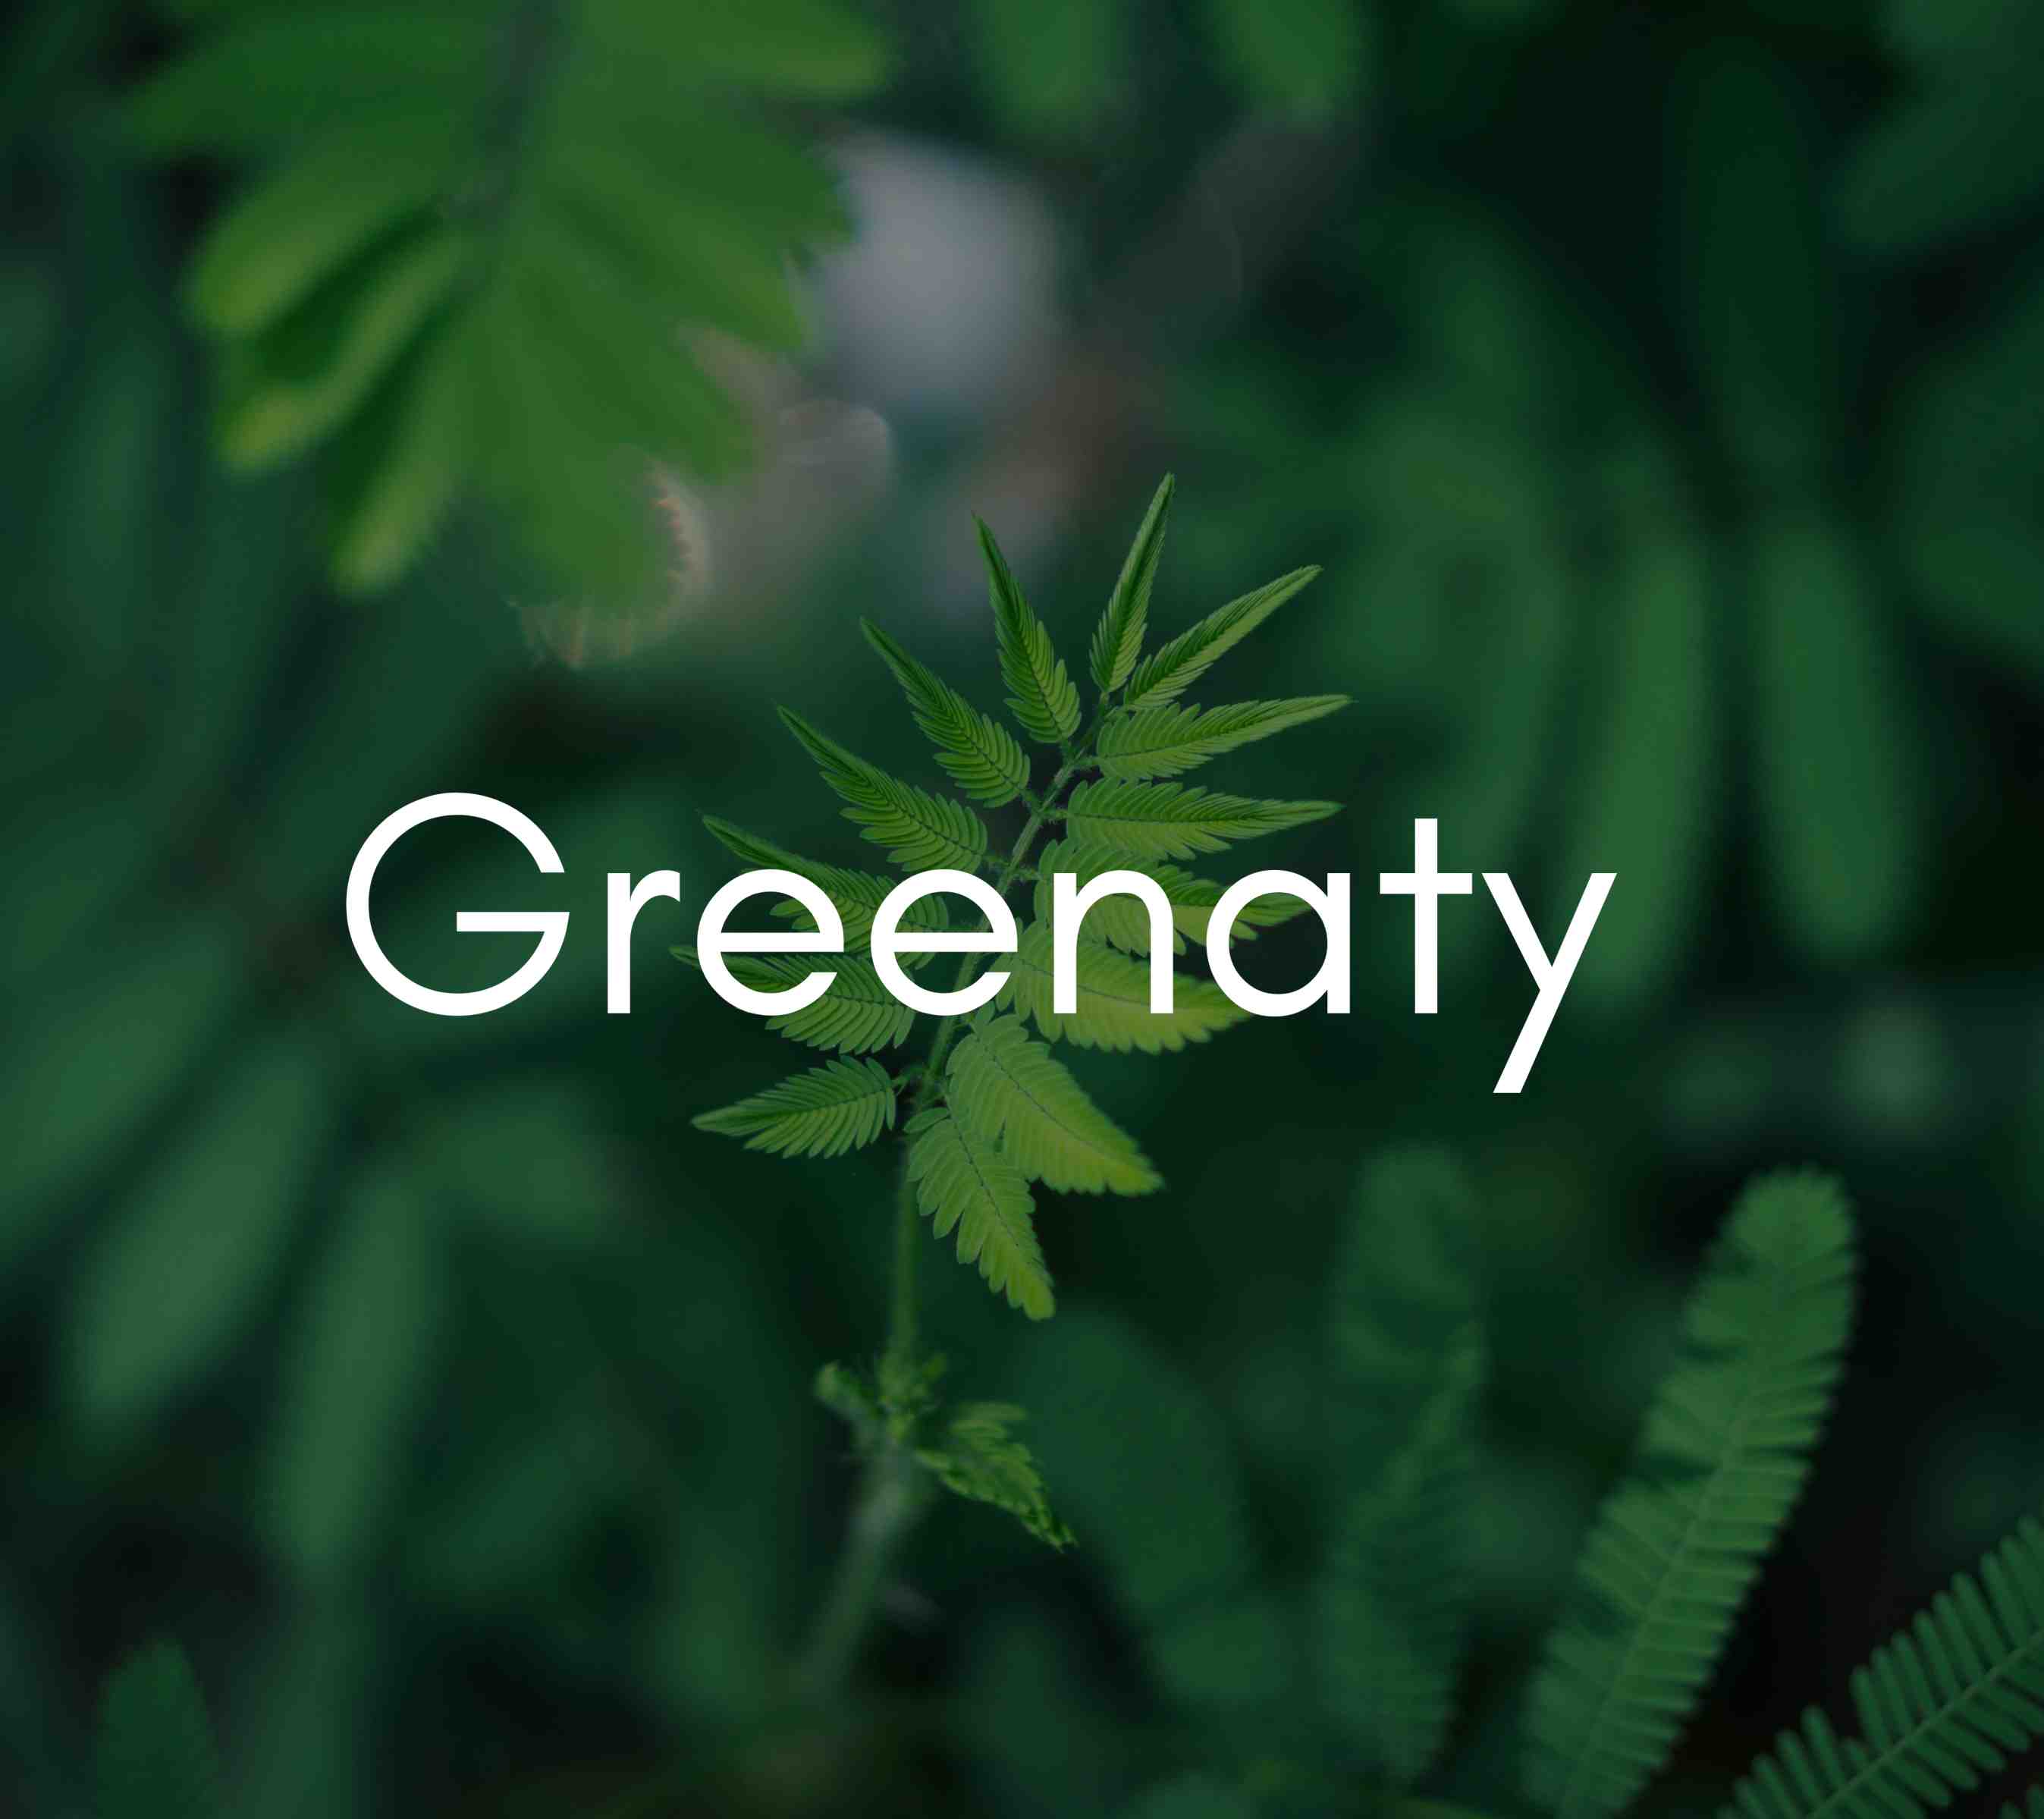 Why greenaty? Greenaty value propositions 